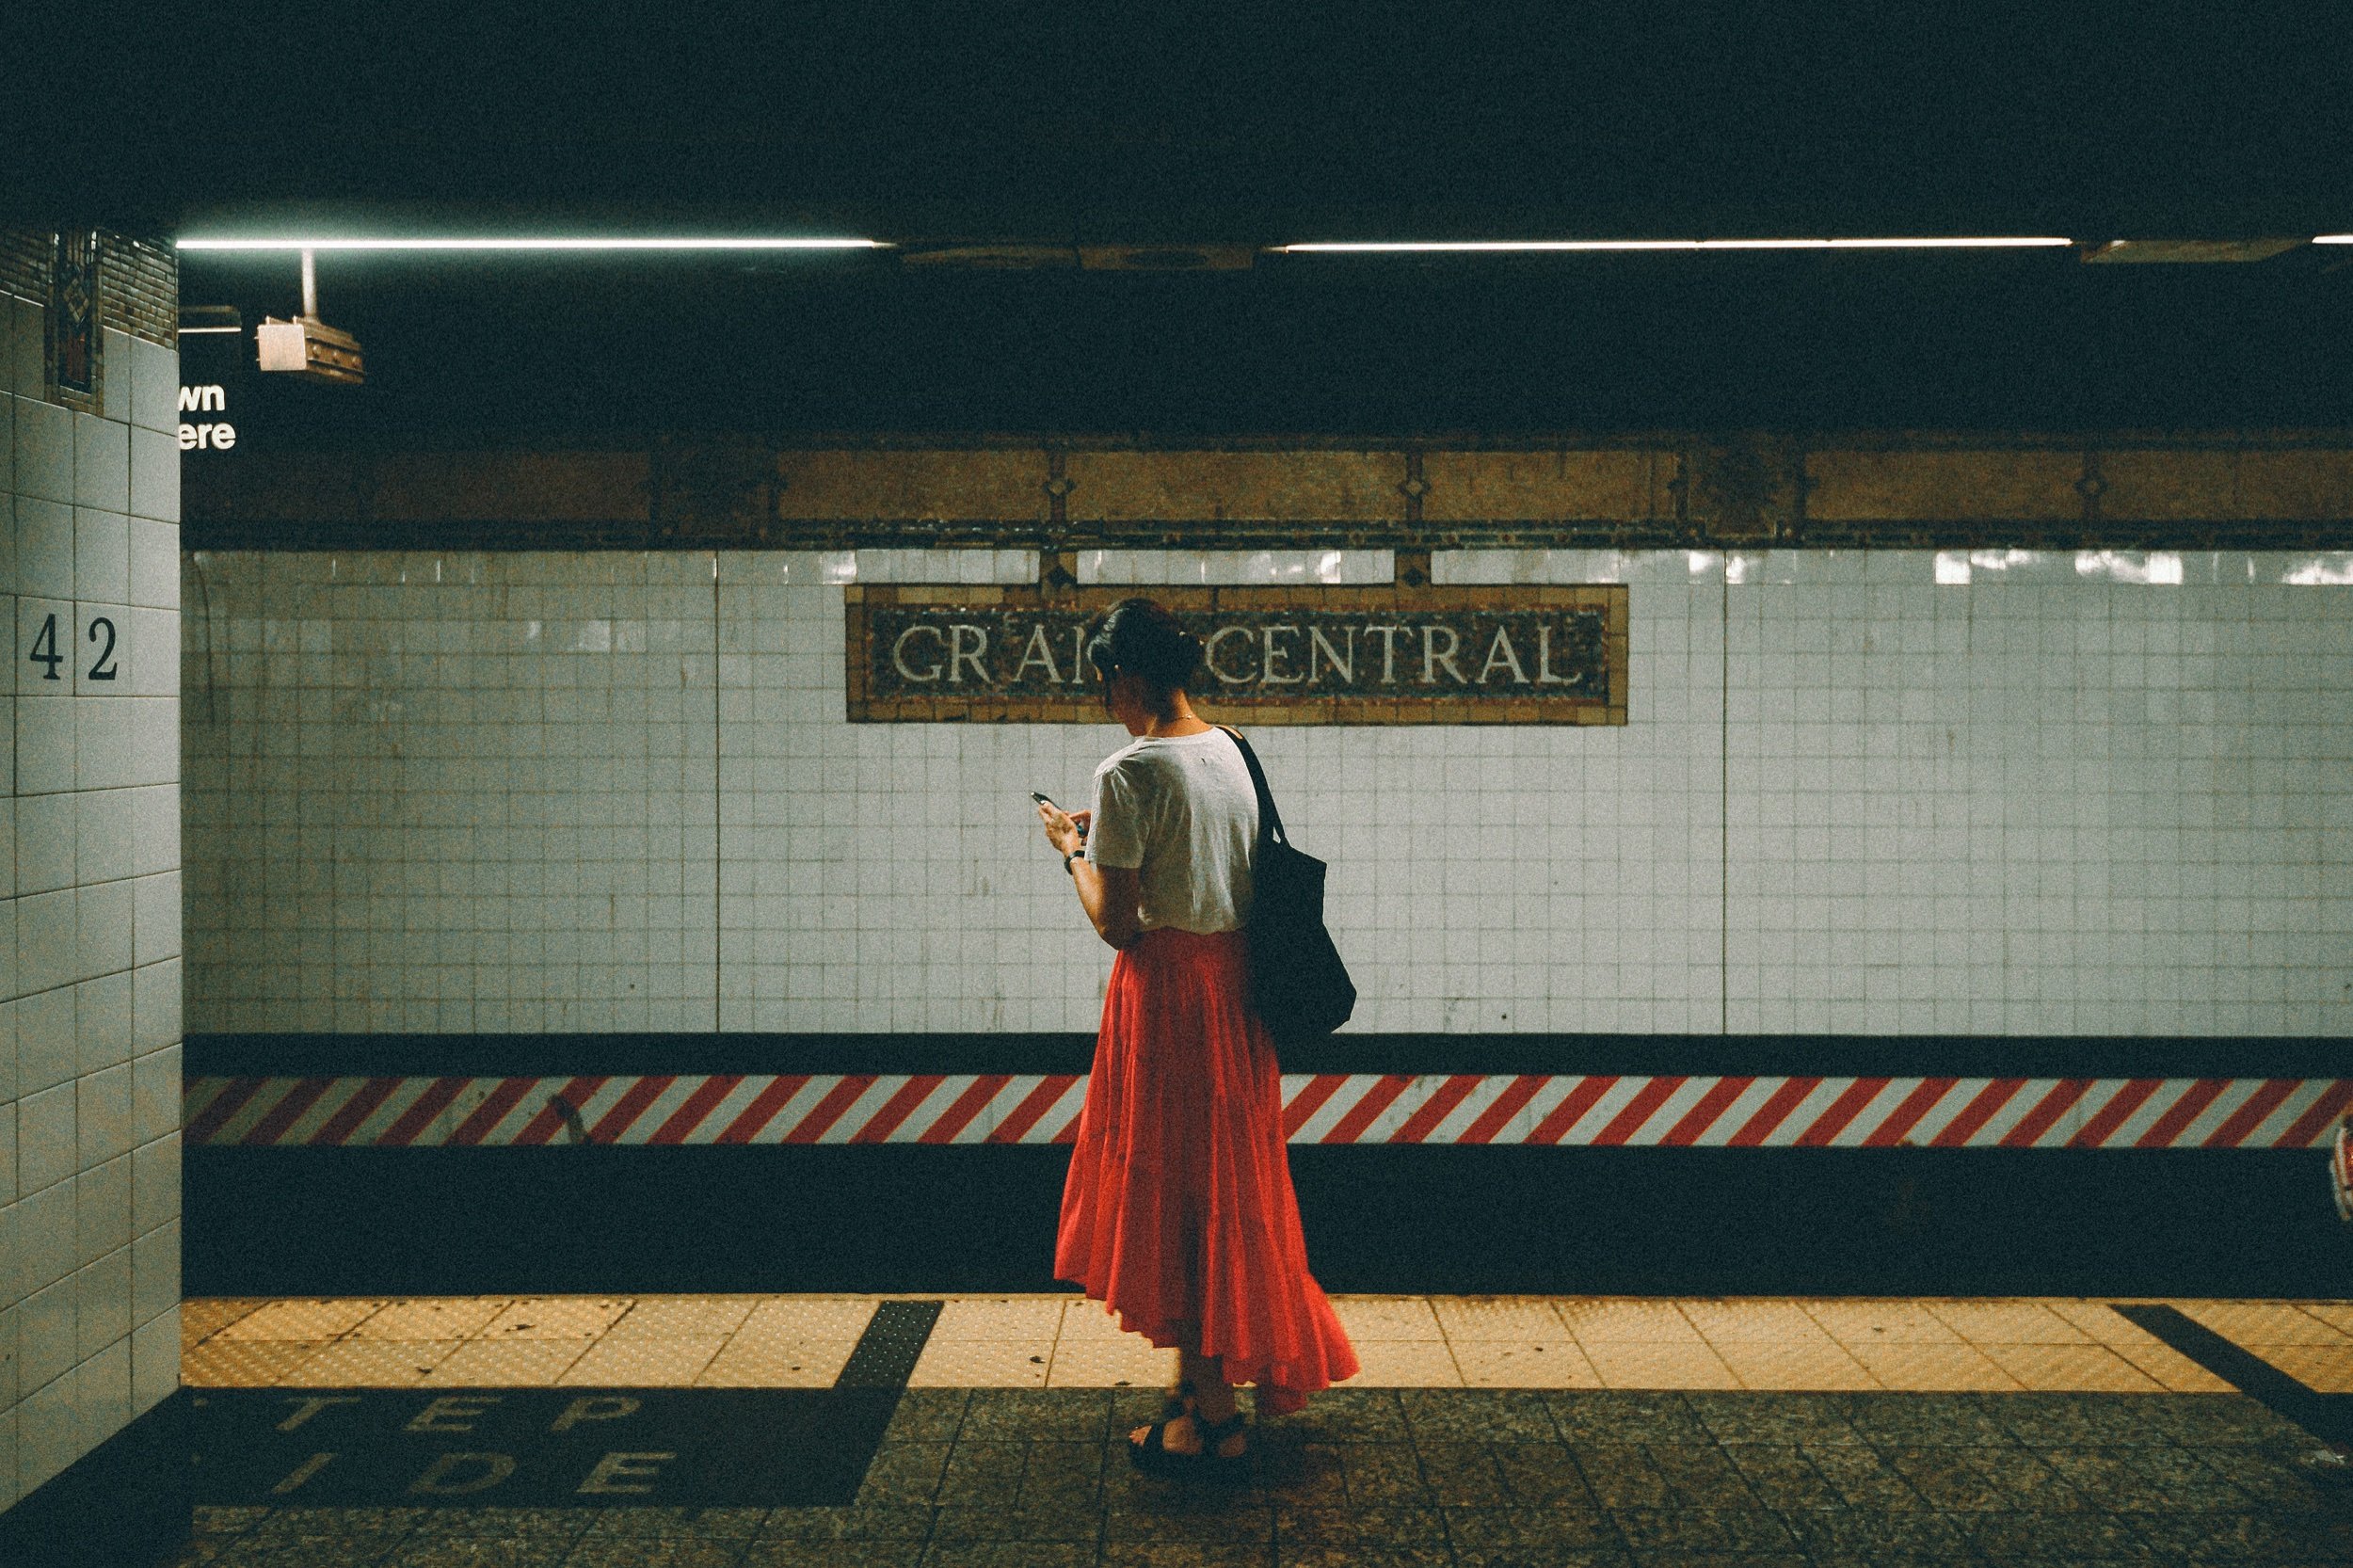  Grand Central Station, New York City, 2018 